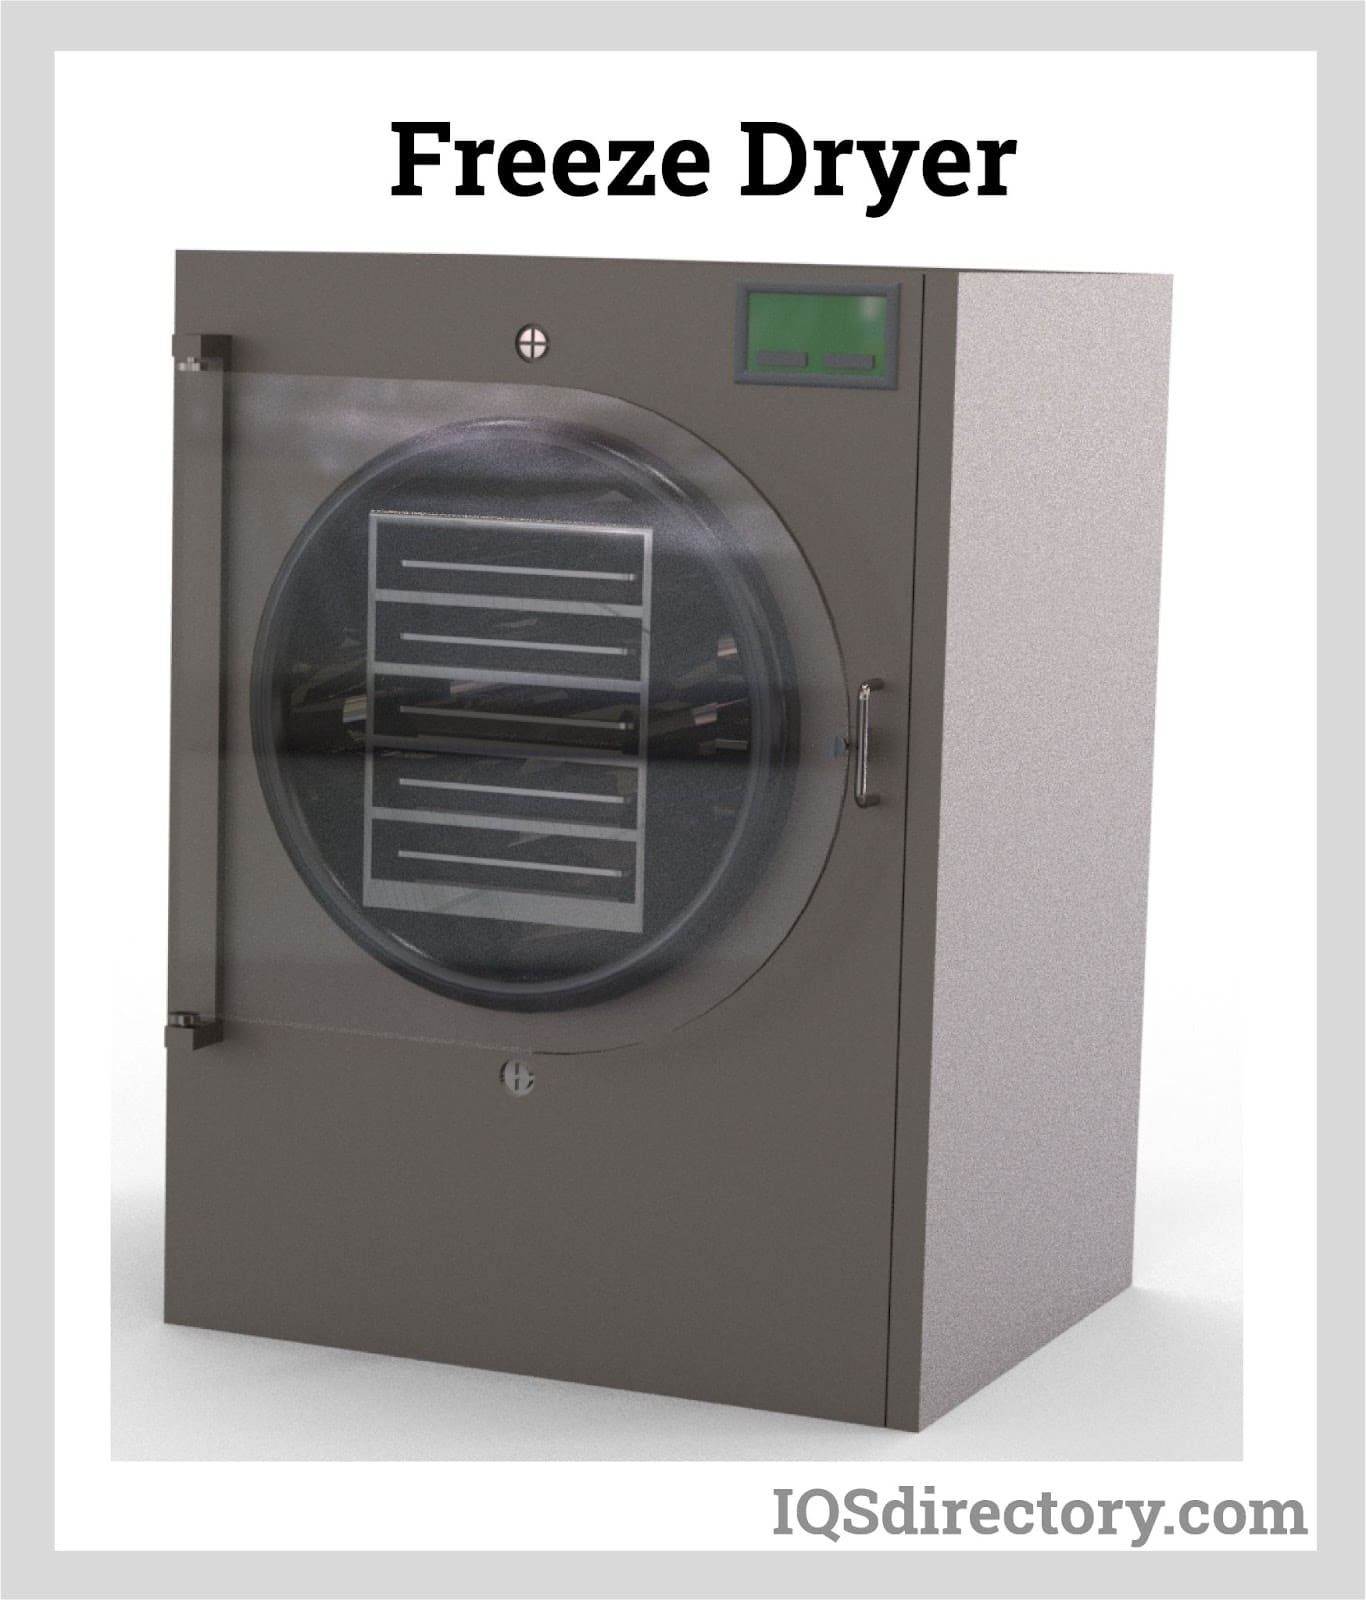 Freeze Dryer